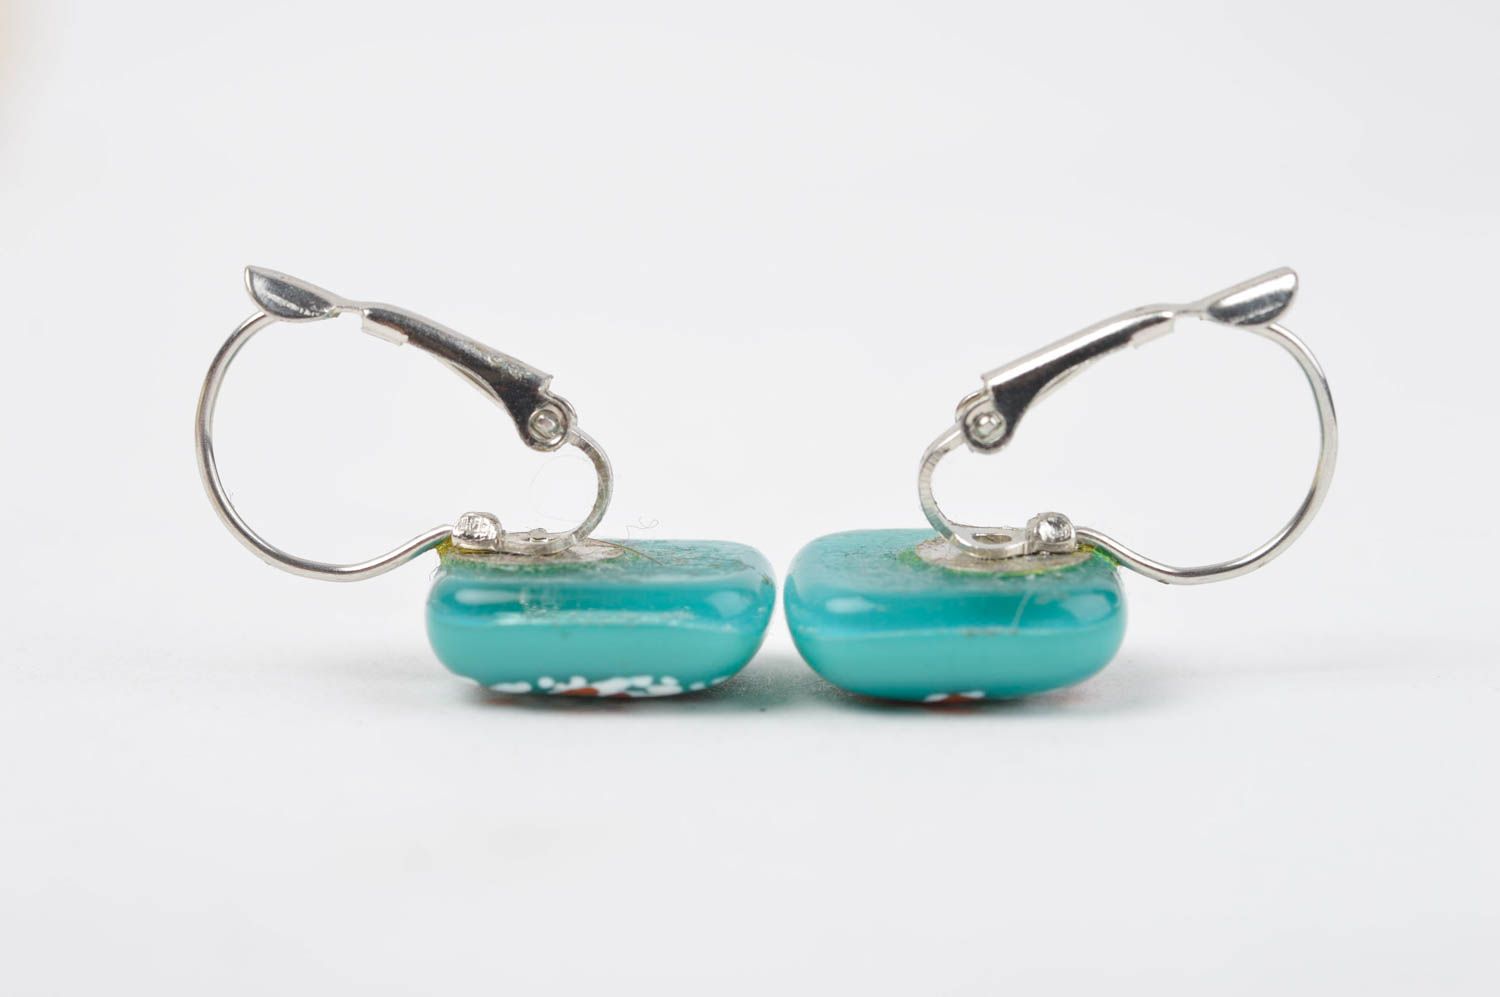 Elegant handmade glass earrings glass art artisan jewelry designs gift ideas photo 3